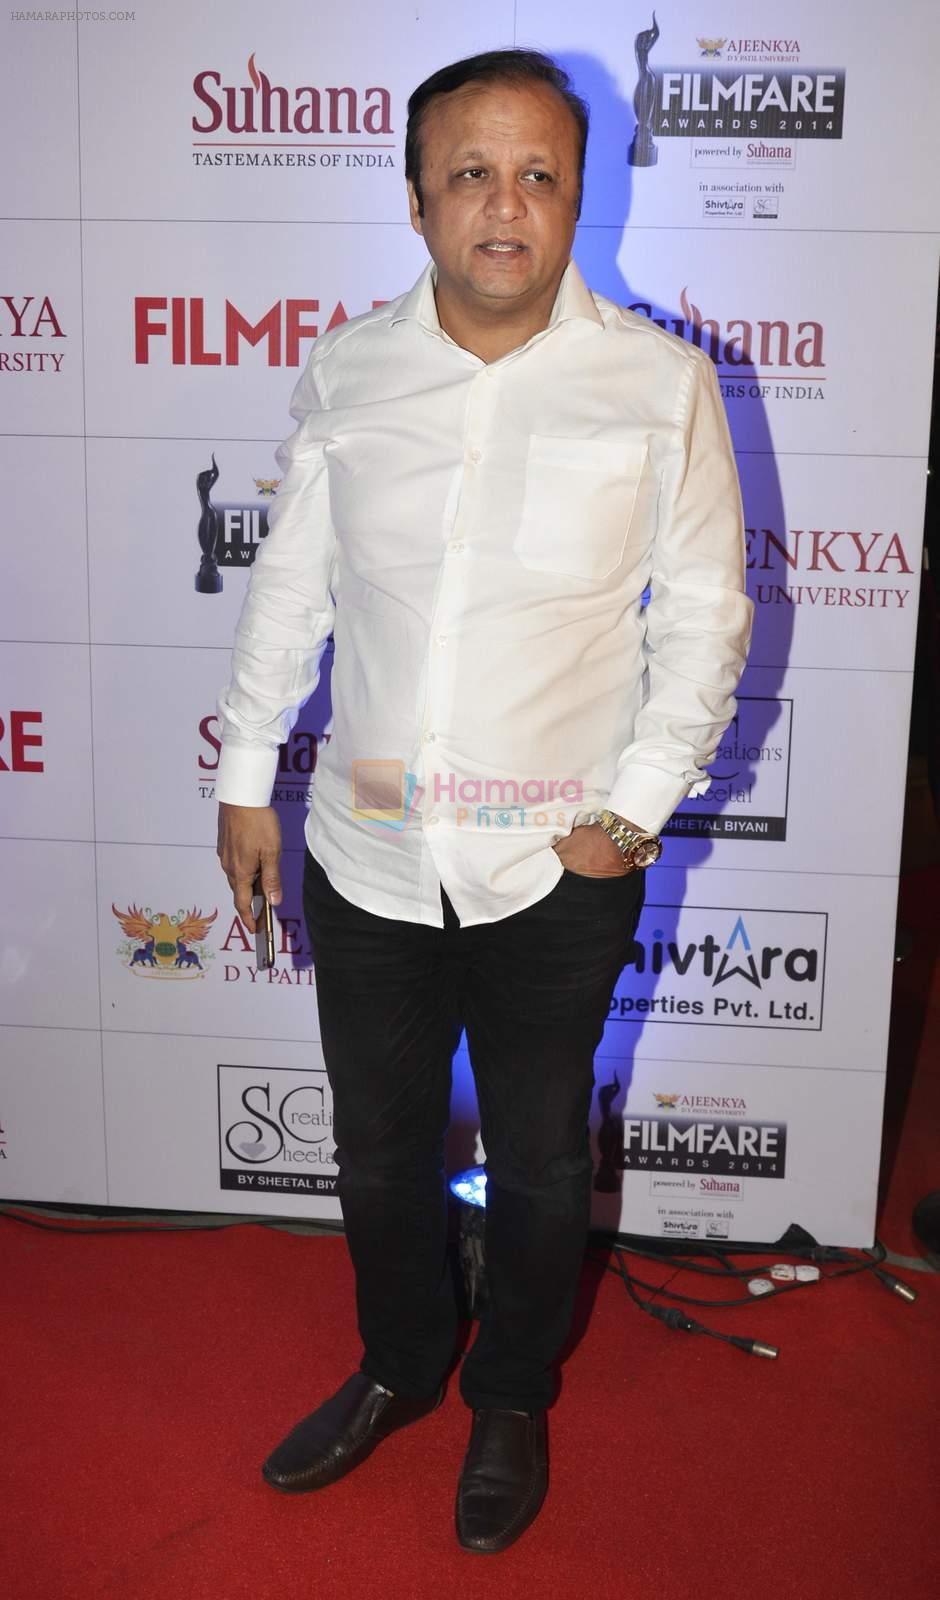 Asif Bhamla at the Red Carpet of _Ajeenkya DY Patil University Filmfare Awards